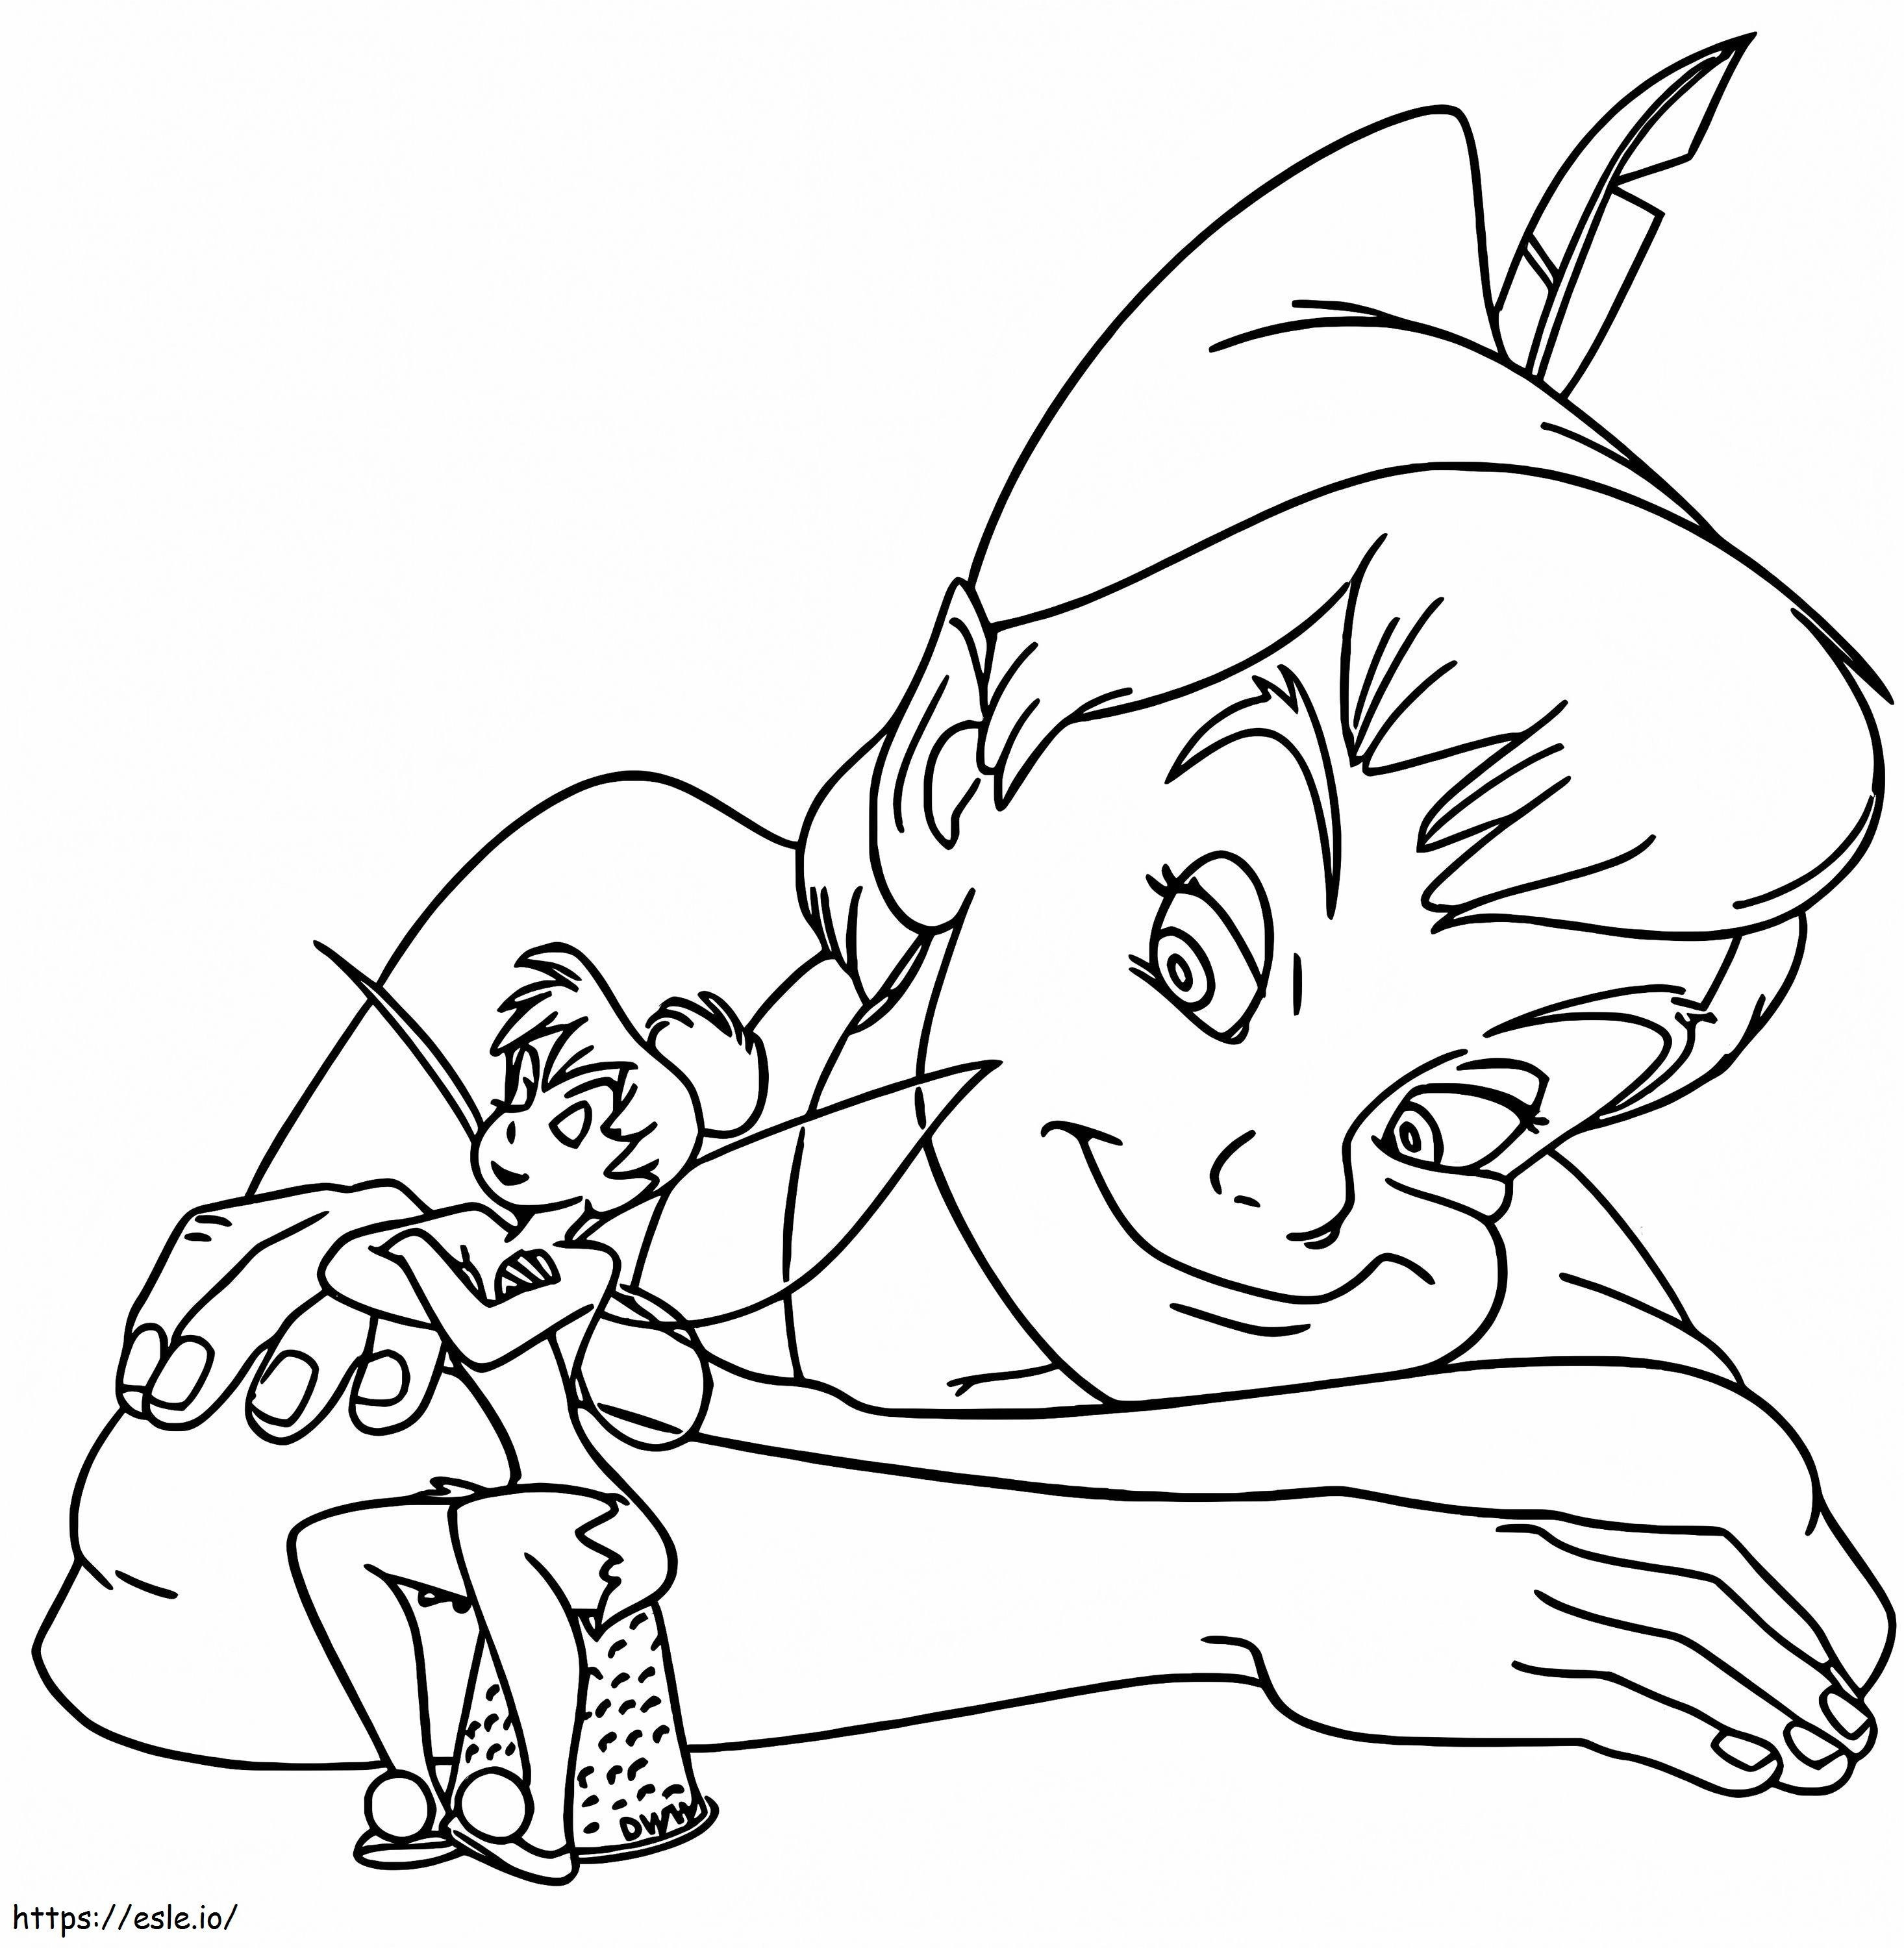 Peter Pan ve Tinker Bell boyama